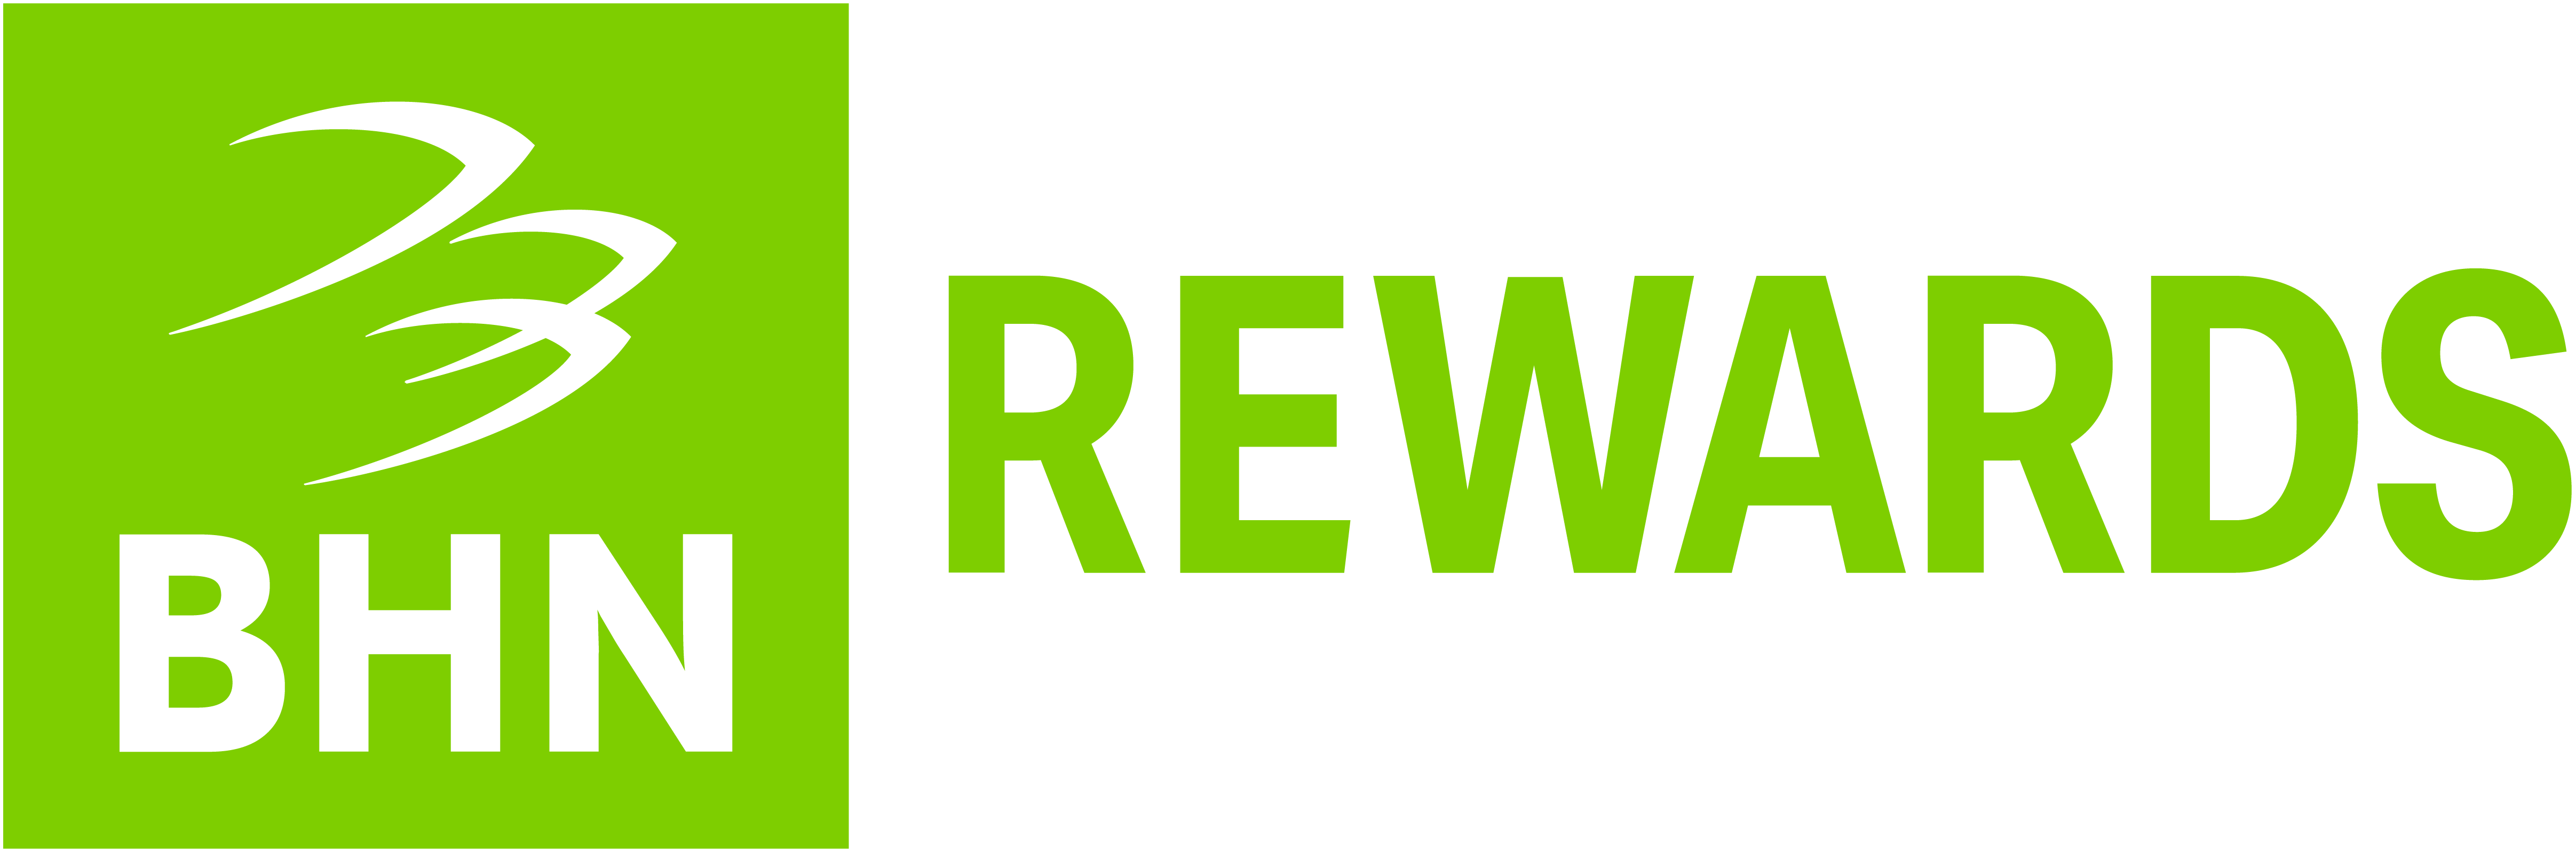 green-bhn-rewards-logo